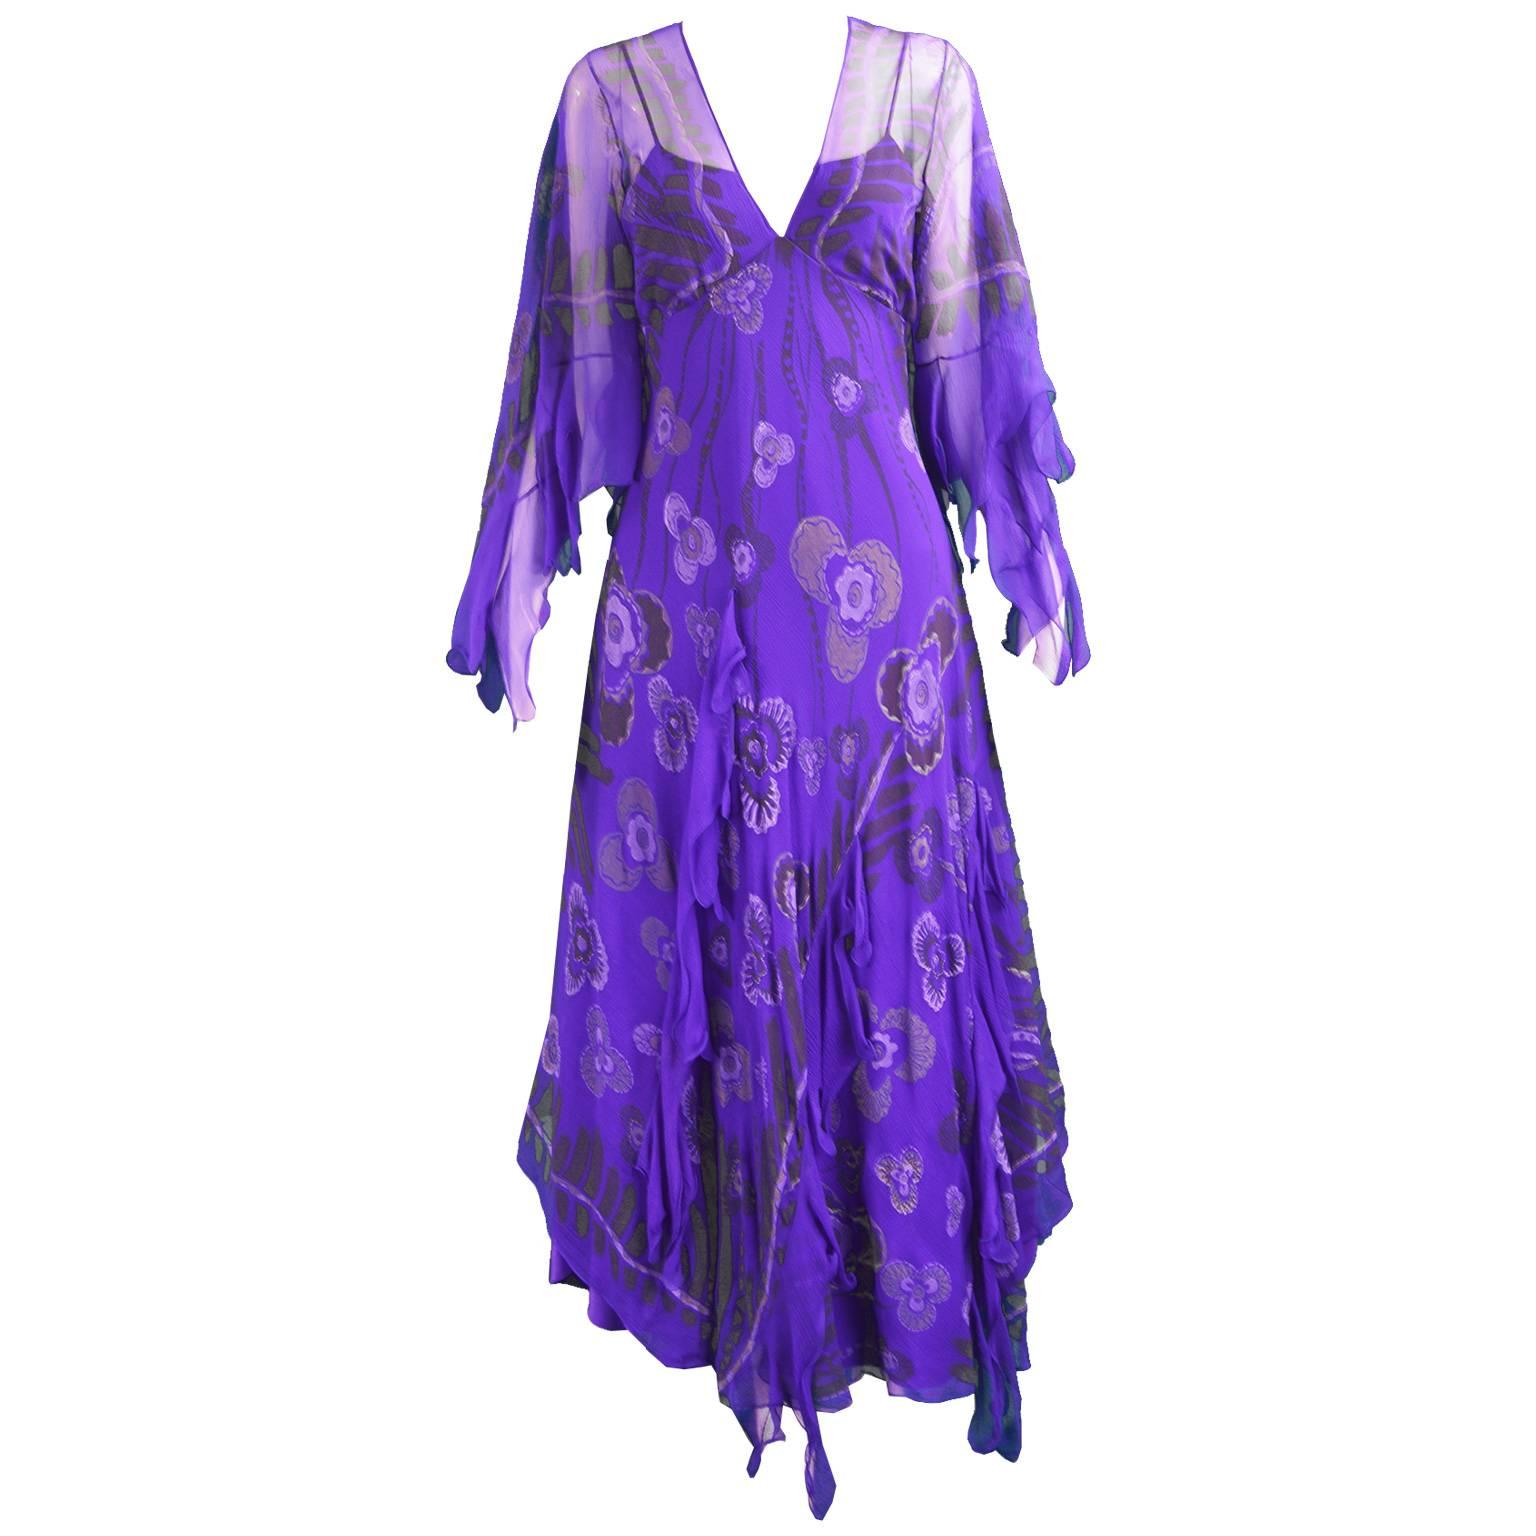 Zandra Rhodes Purple Floral Silk Chiffon Dress with Floor Length Train, c. 1970s